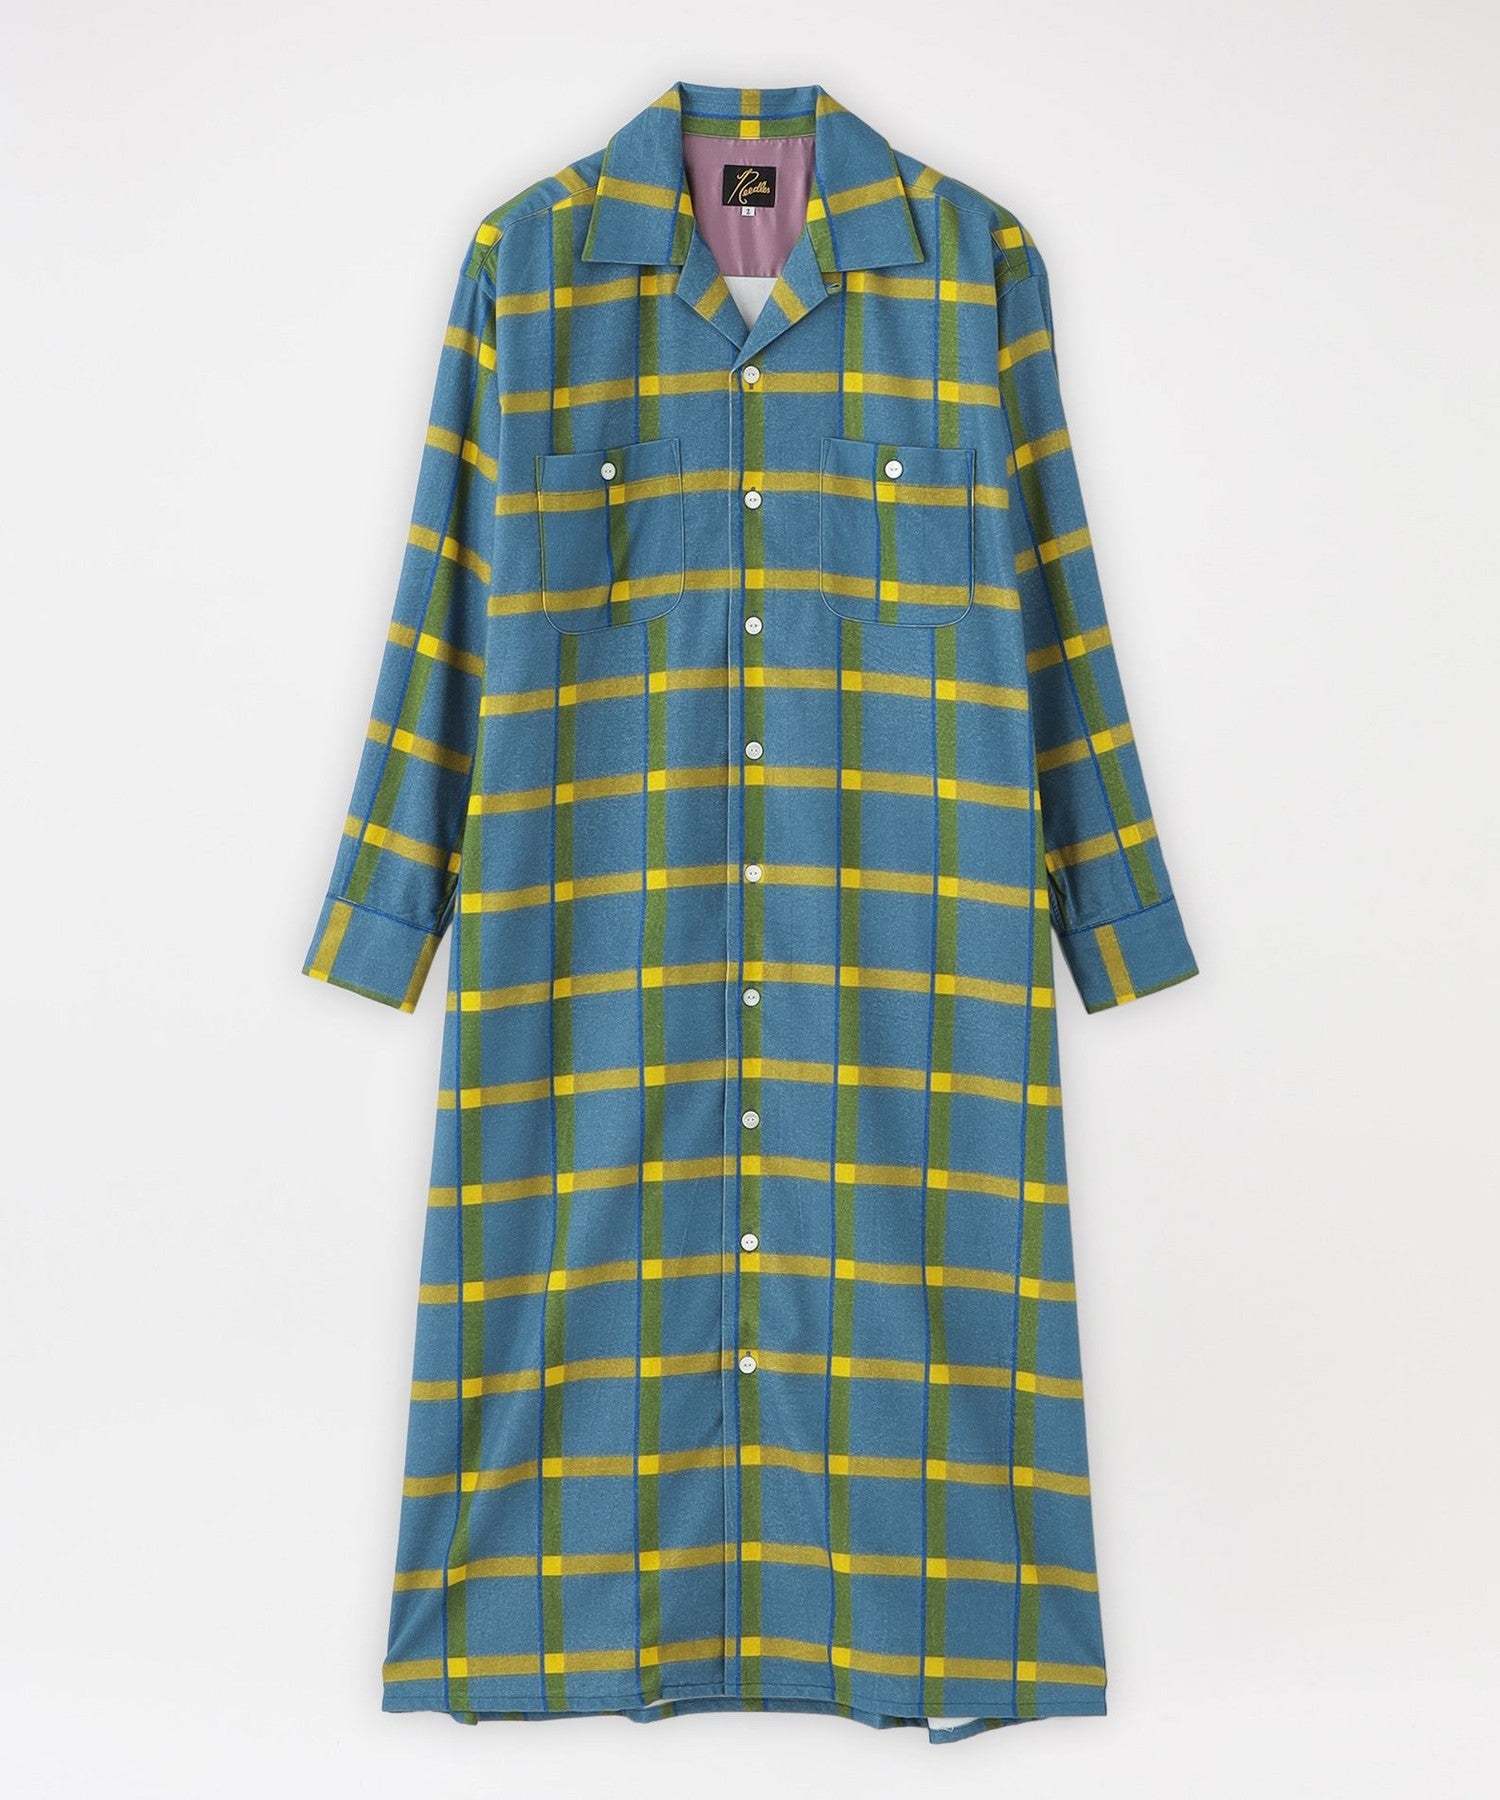 【Needles】ドレス One-Up Shirt Dress R/C Flannel Cloth / Printed LQ154